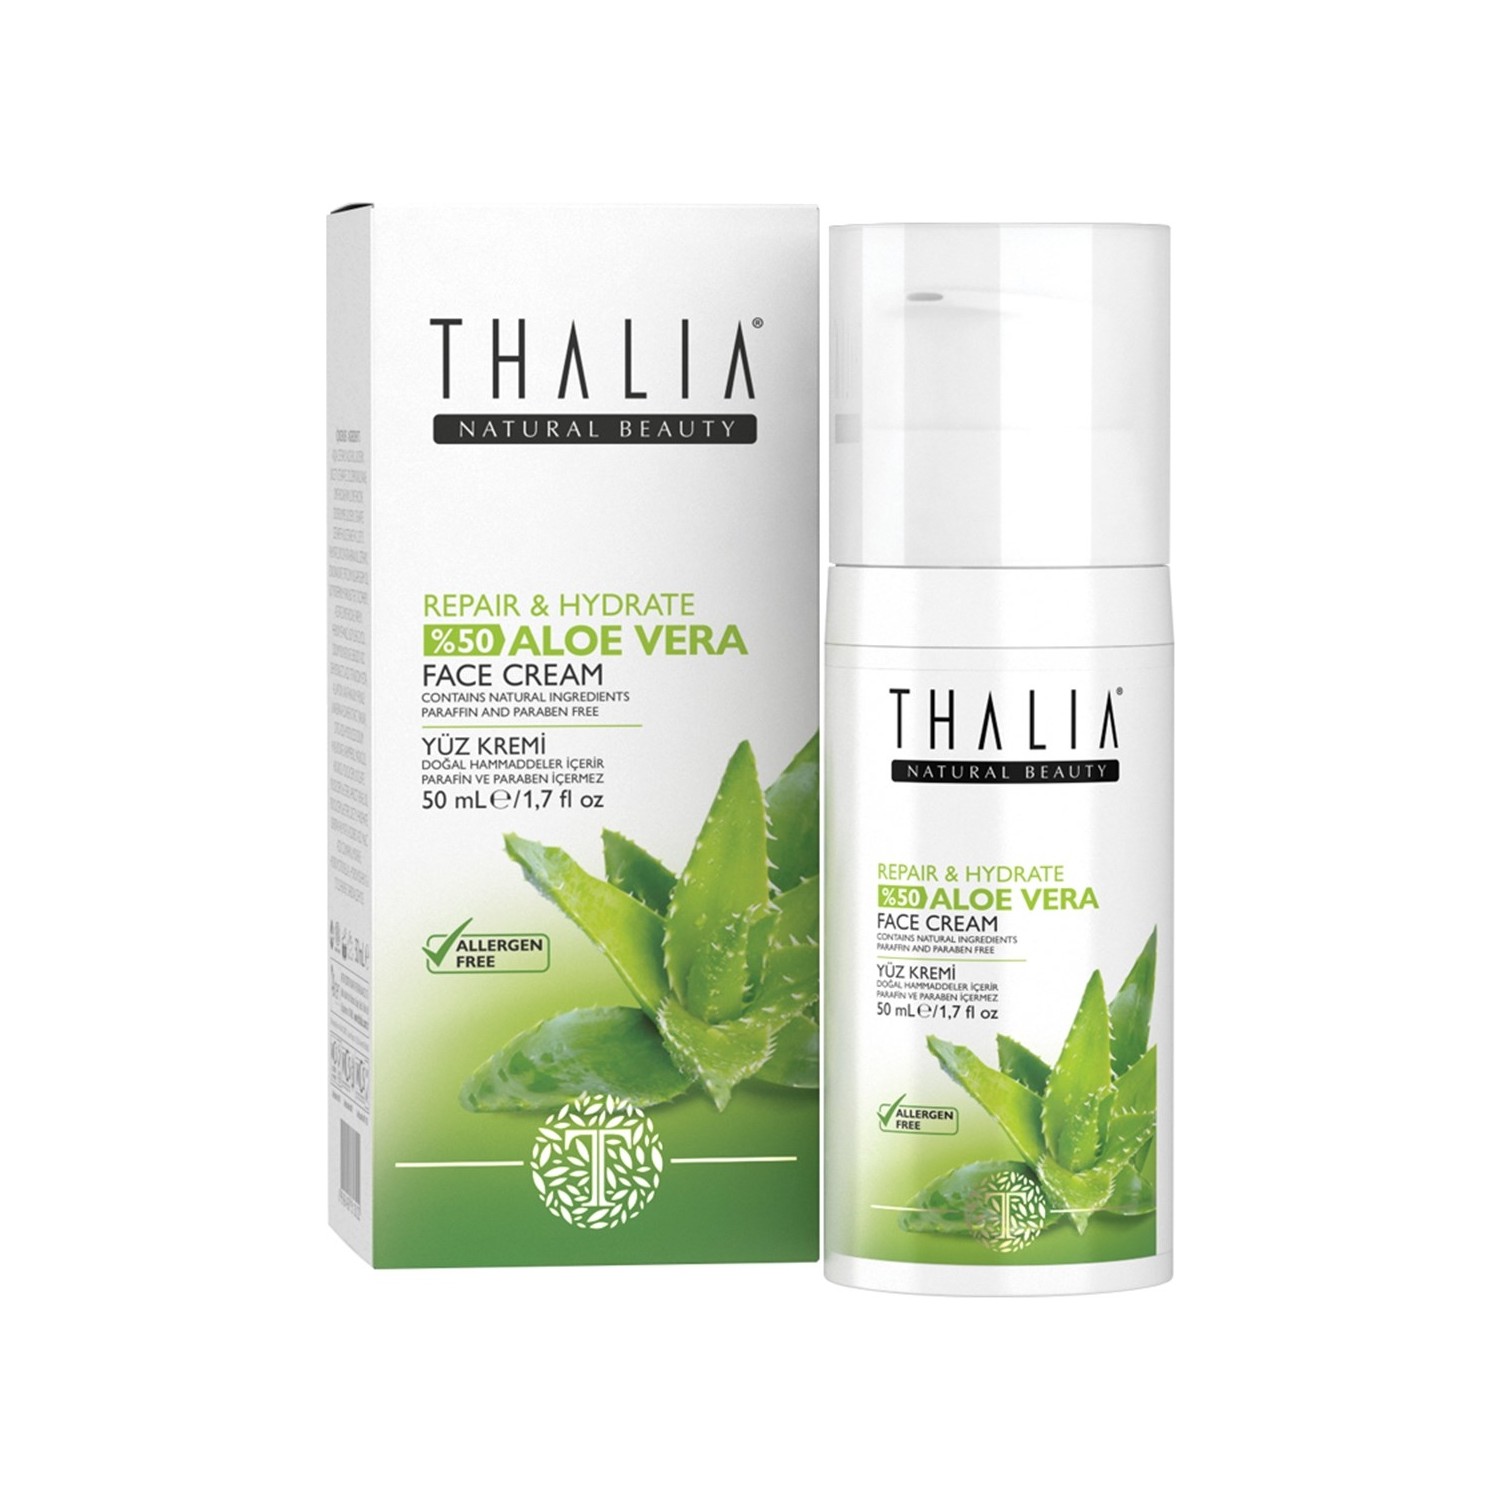 Восстанавливающий и увлажняющий крем Thalia Aloe Vera Series для лица, 50 мл цена и фото